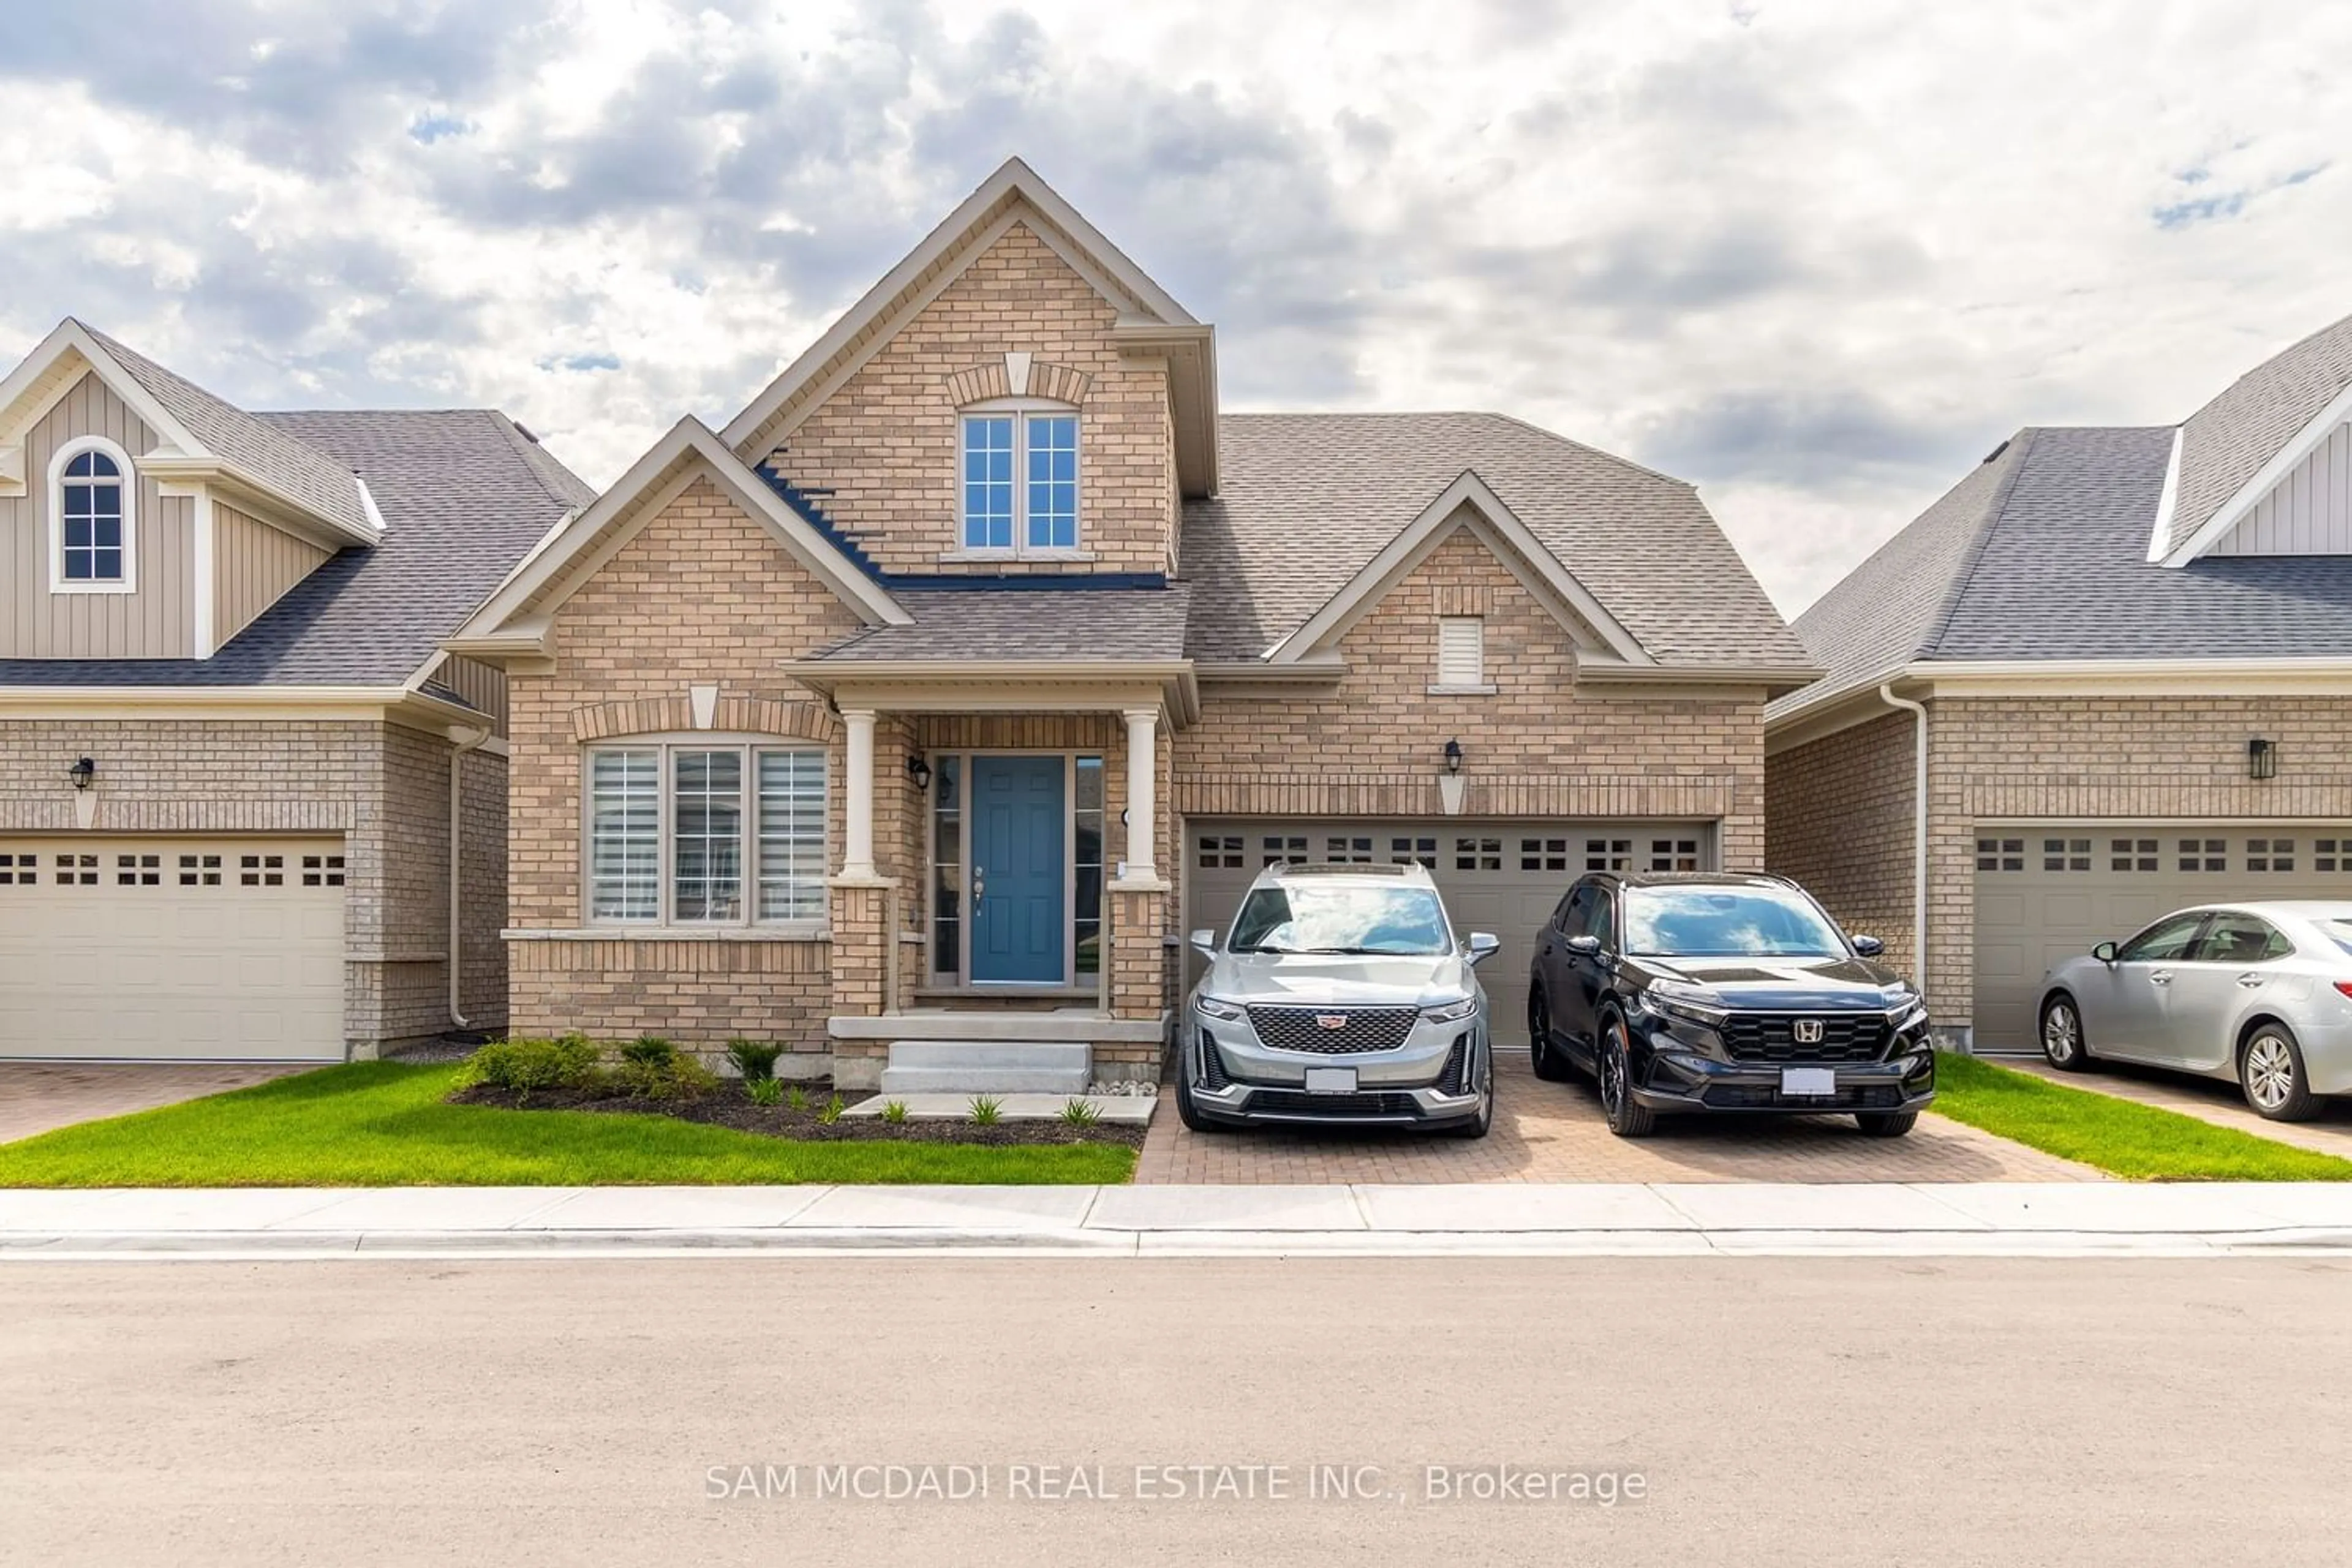 Home with brick exterior material for 4 Clermiston Cres, Brampton Ontario L6R 3W9